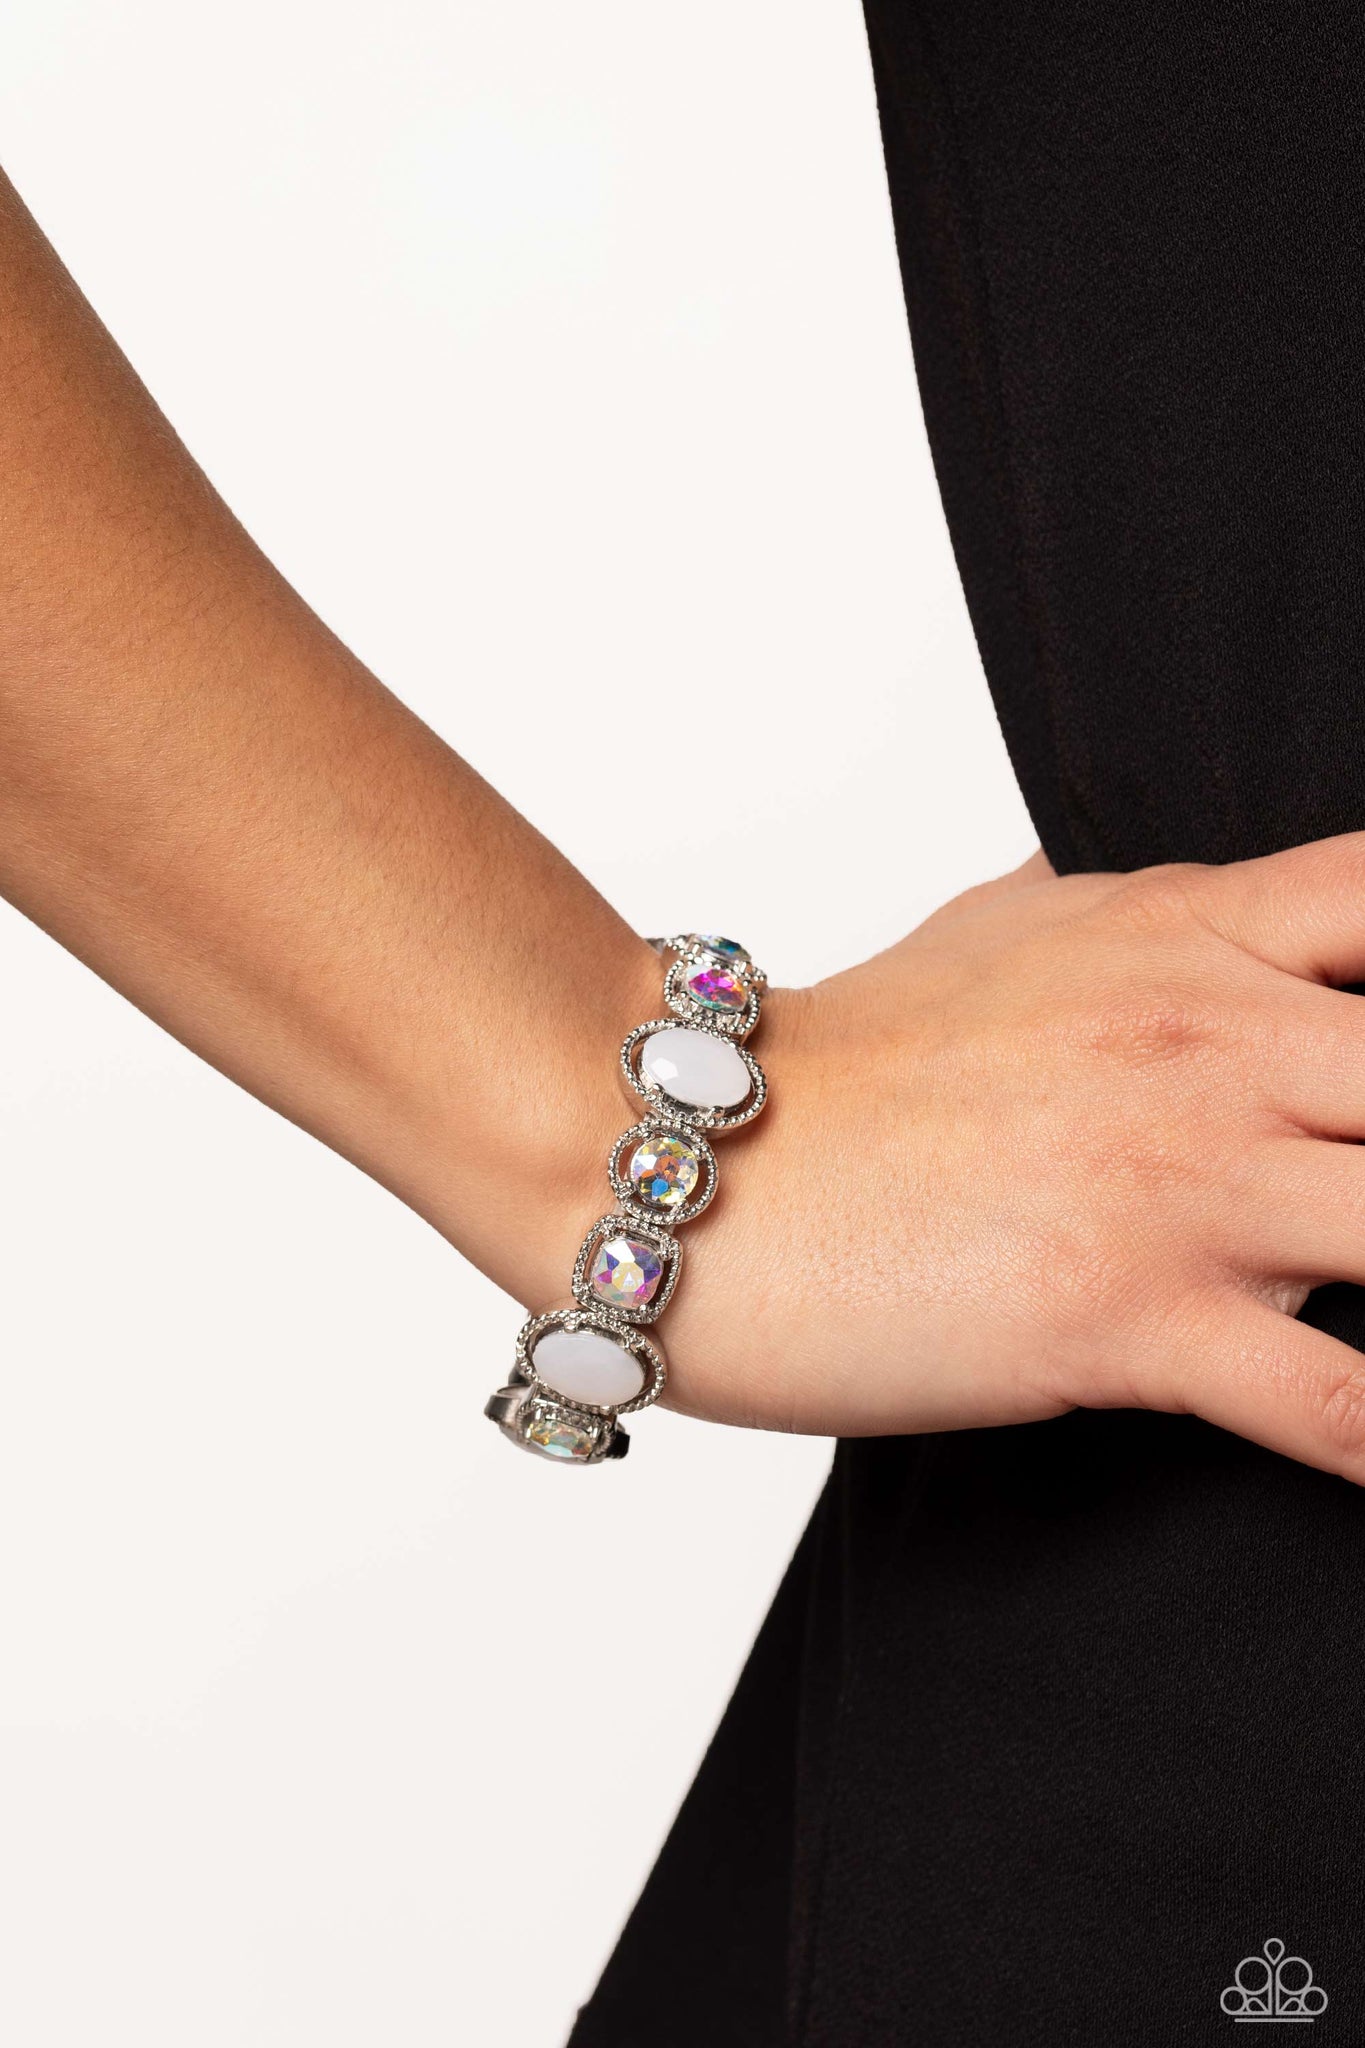 Fashion Fairy Tale Bracelet (White, Purple)